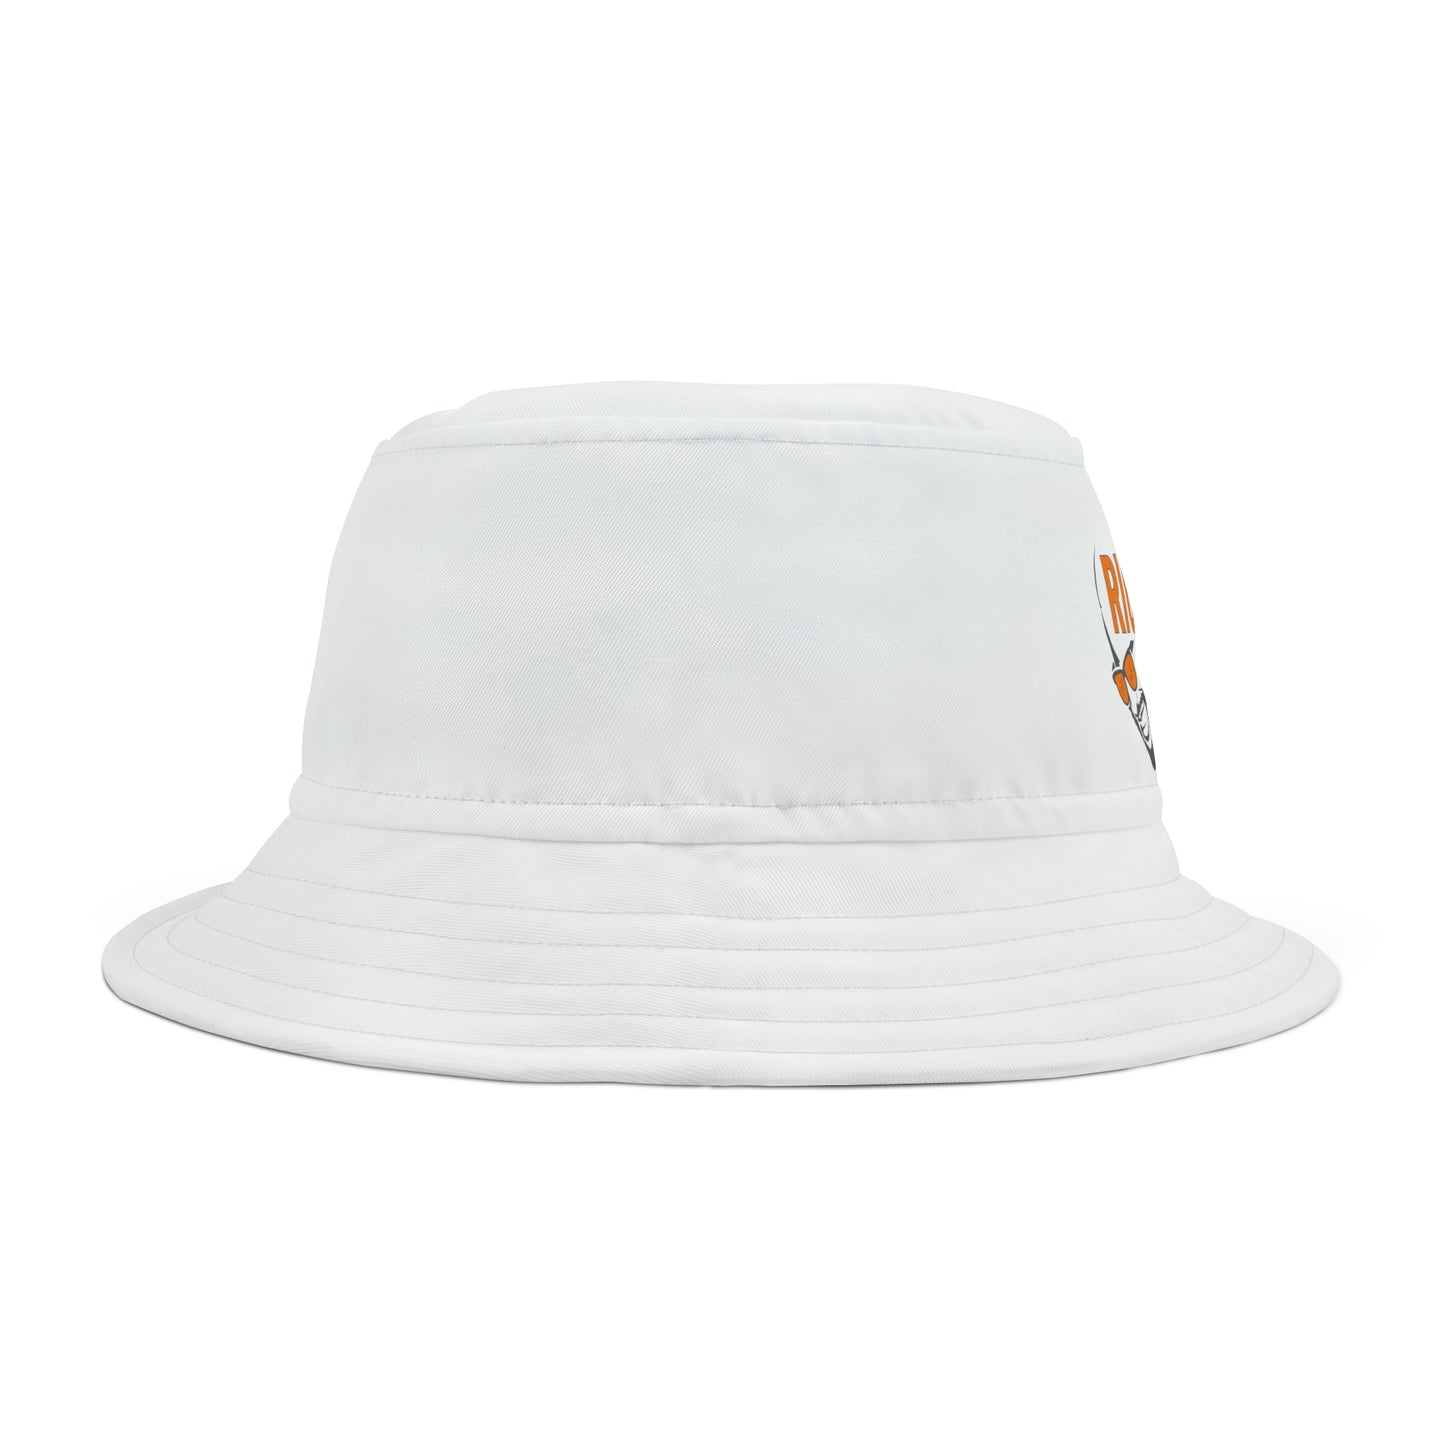 Bucket Hat - RickeySmiley.com